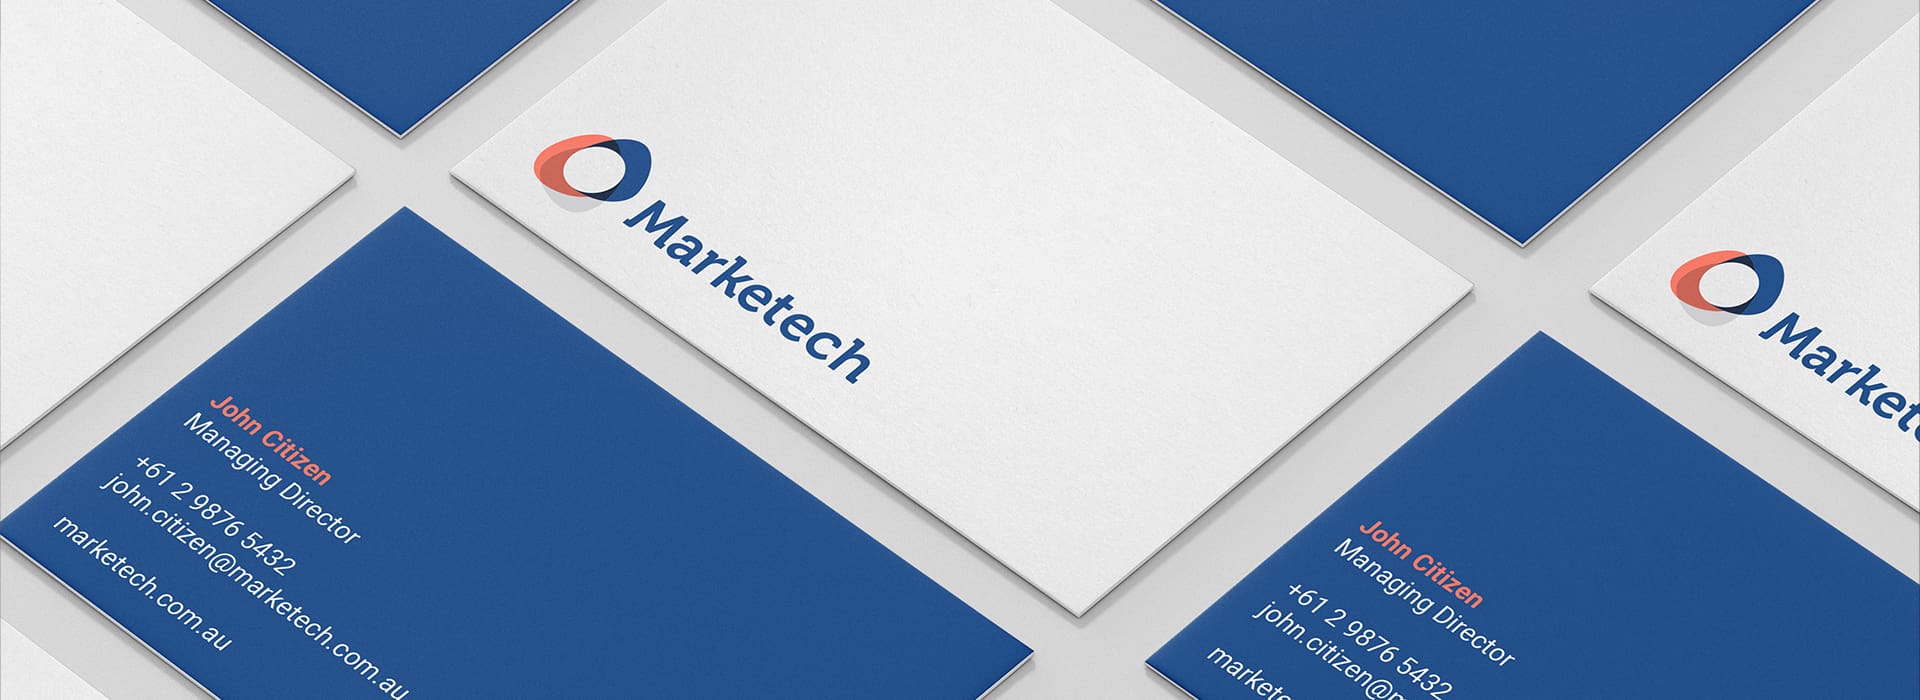 marketech-brand-image02_-min